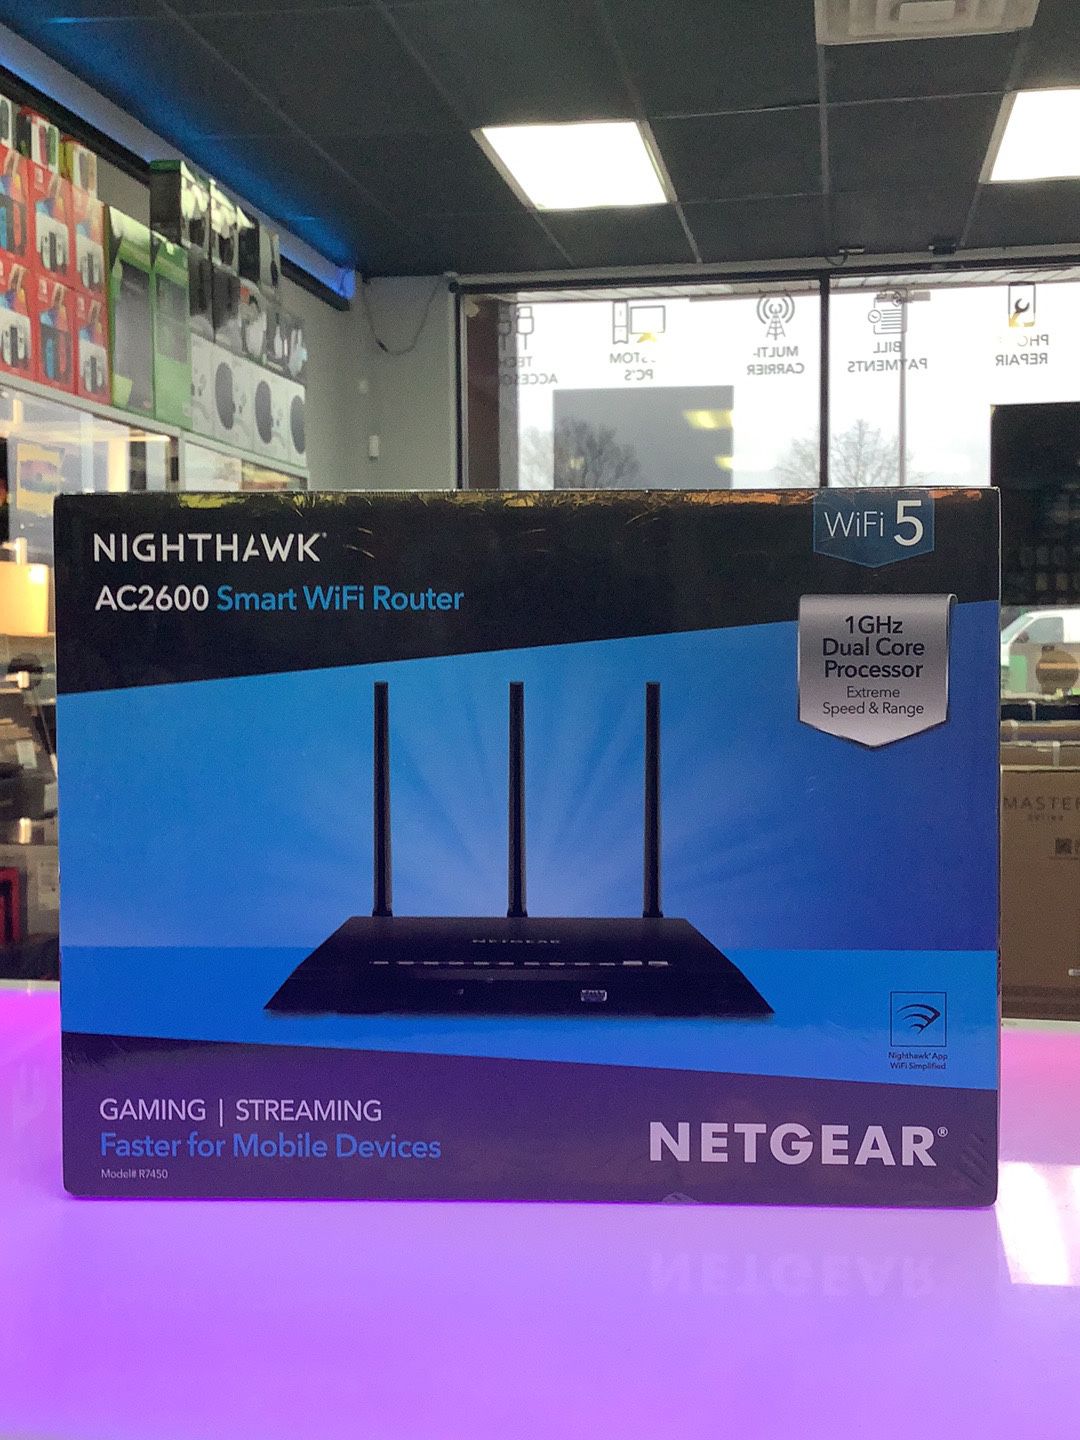 NetGear NightHawk R7450 AC2600 Smart WiFi Router - Brand New